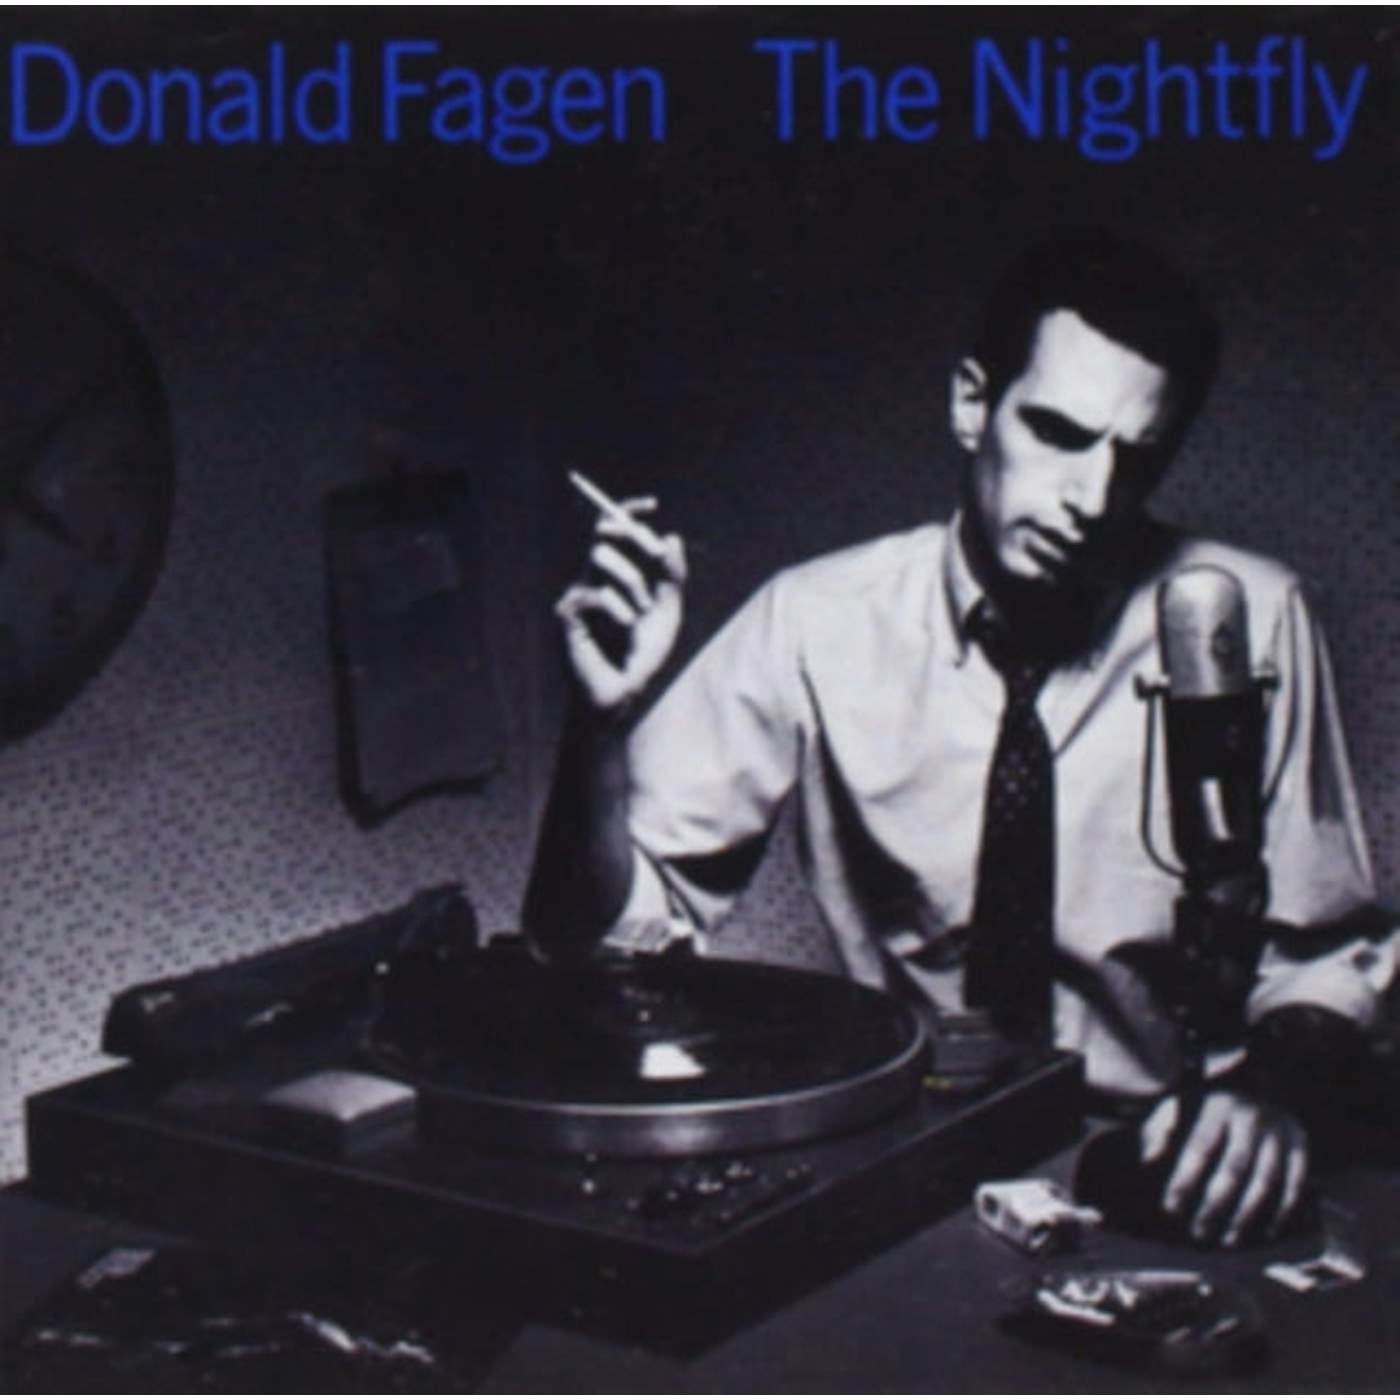 Donald Fagen CD - The Nightfly